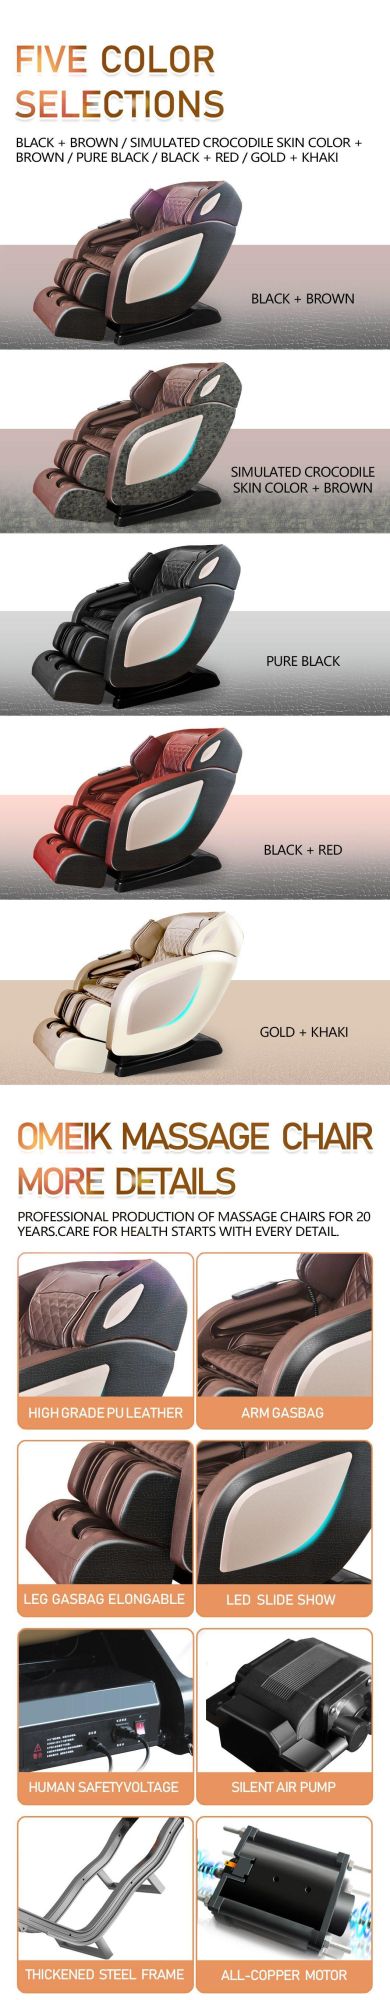 Advanced Zero Gravity Space Saver SL-Track Massage Chair